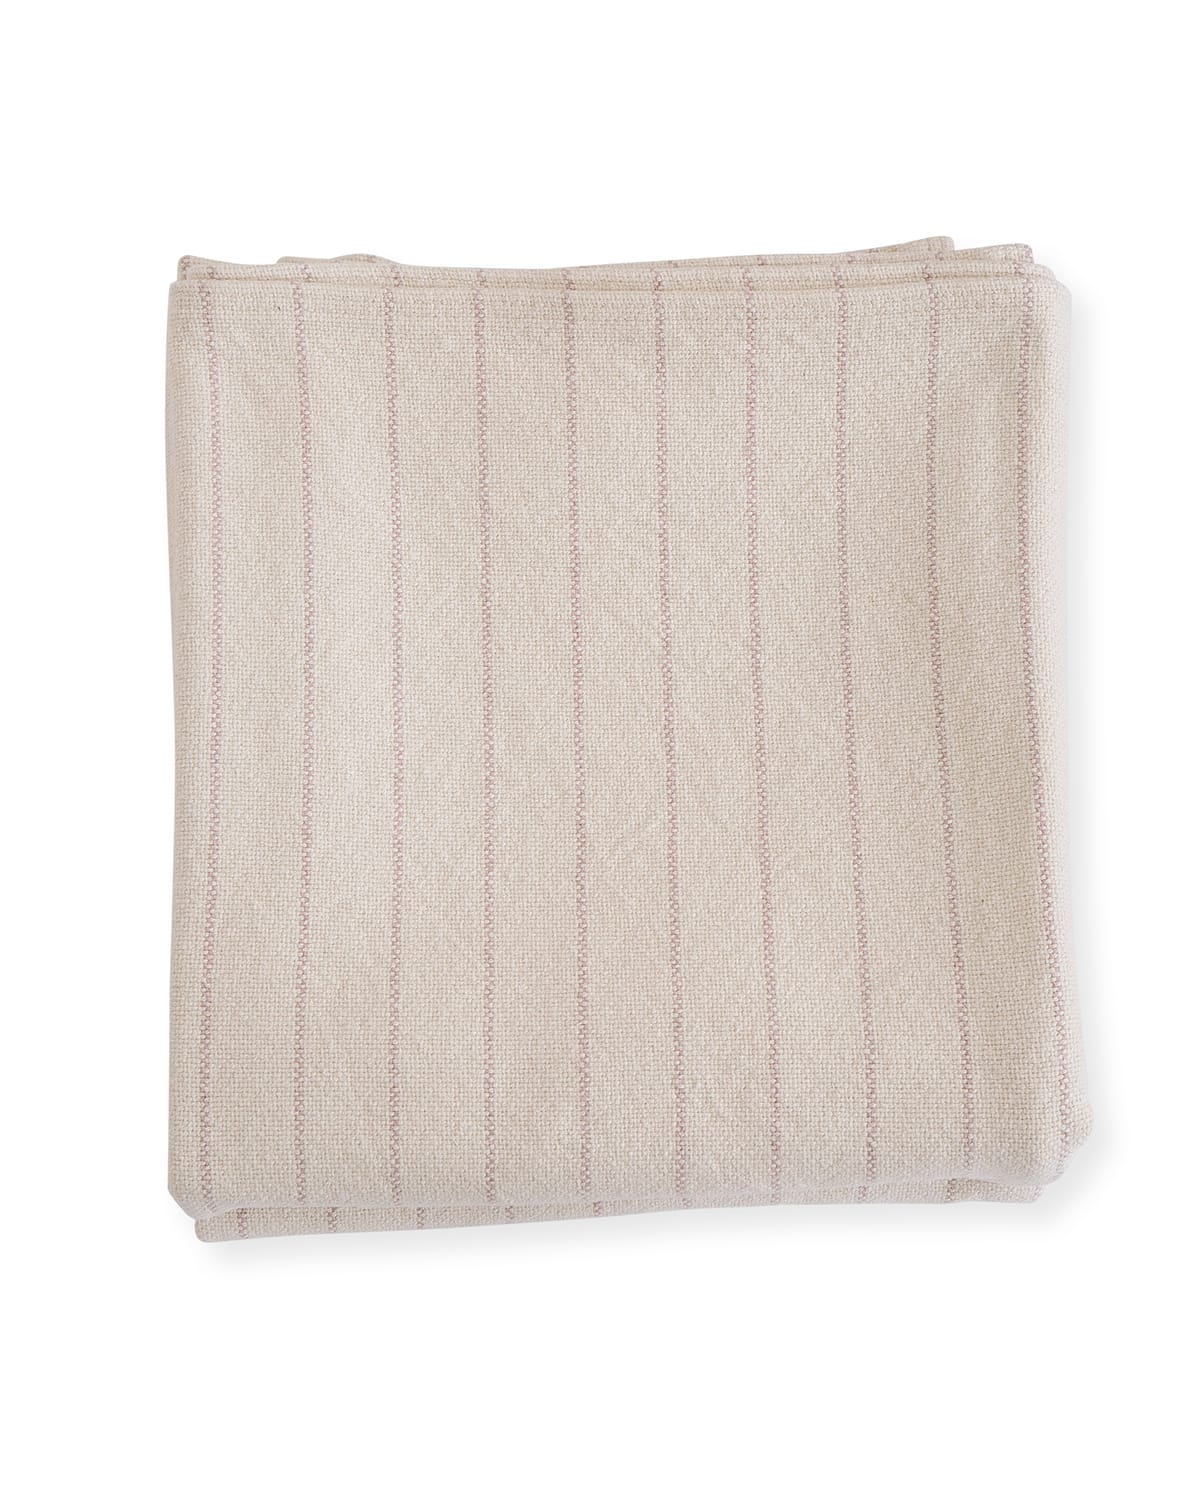 Evangeline Linens Pinstripe Herringbone Cotton King Blanket, Blush In Pink